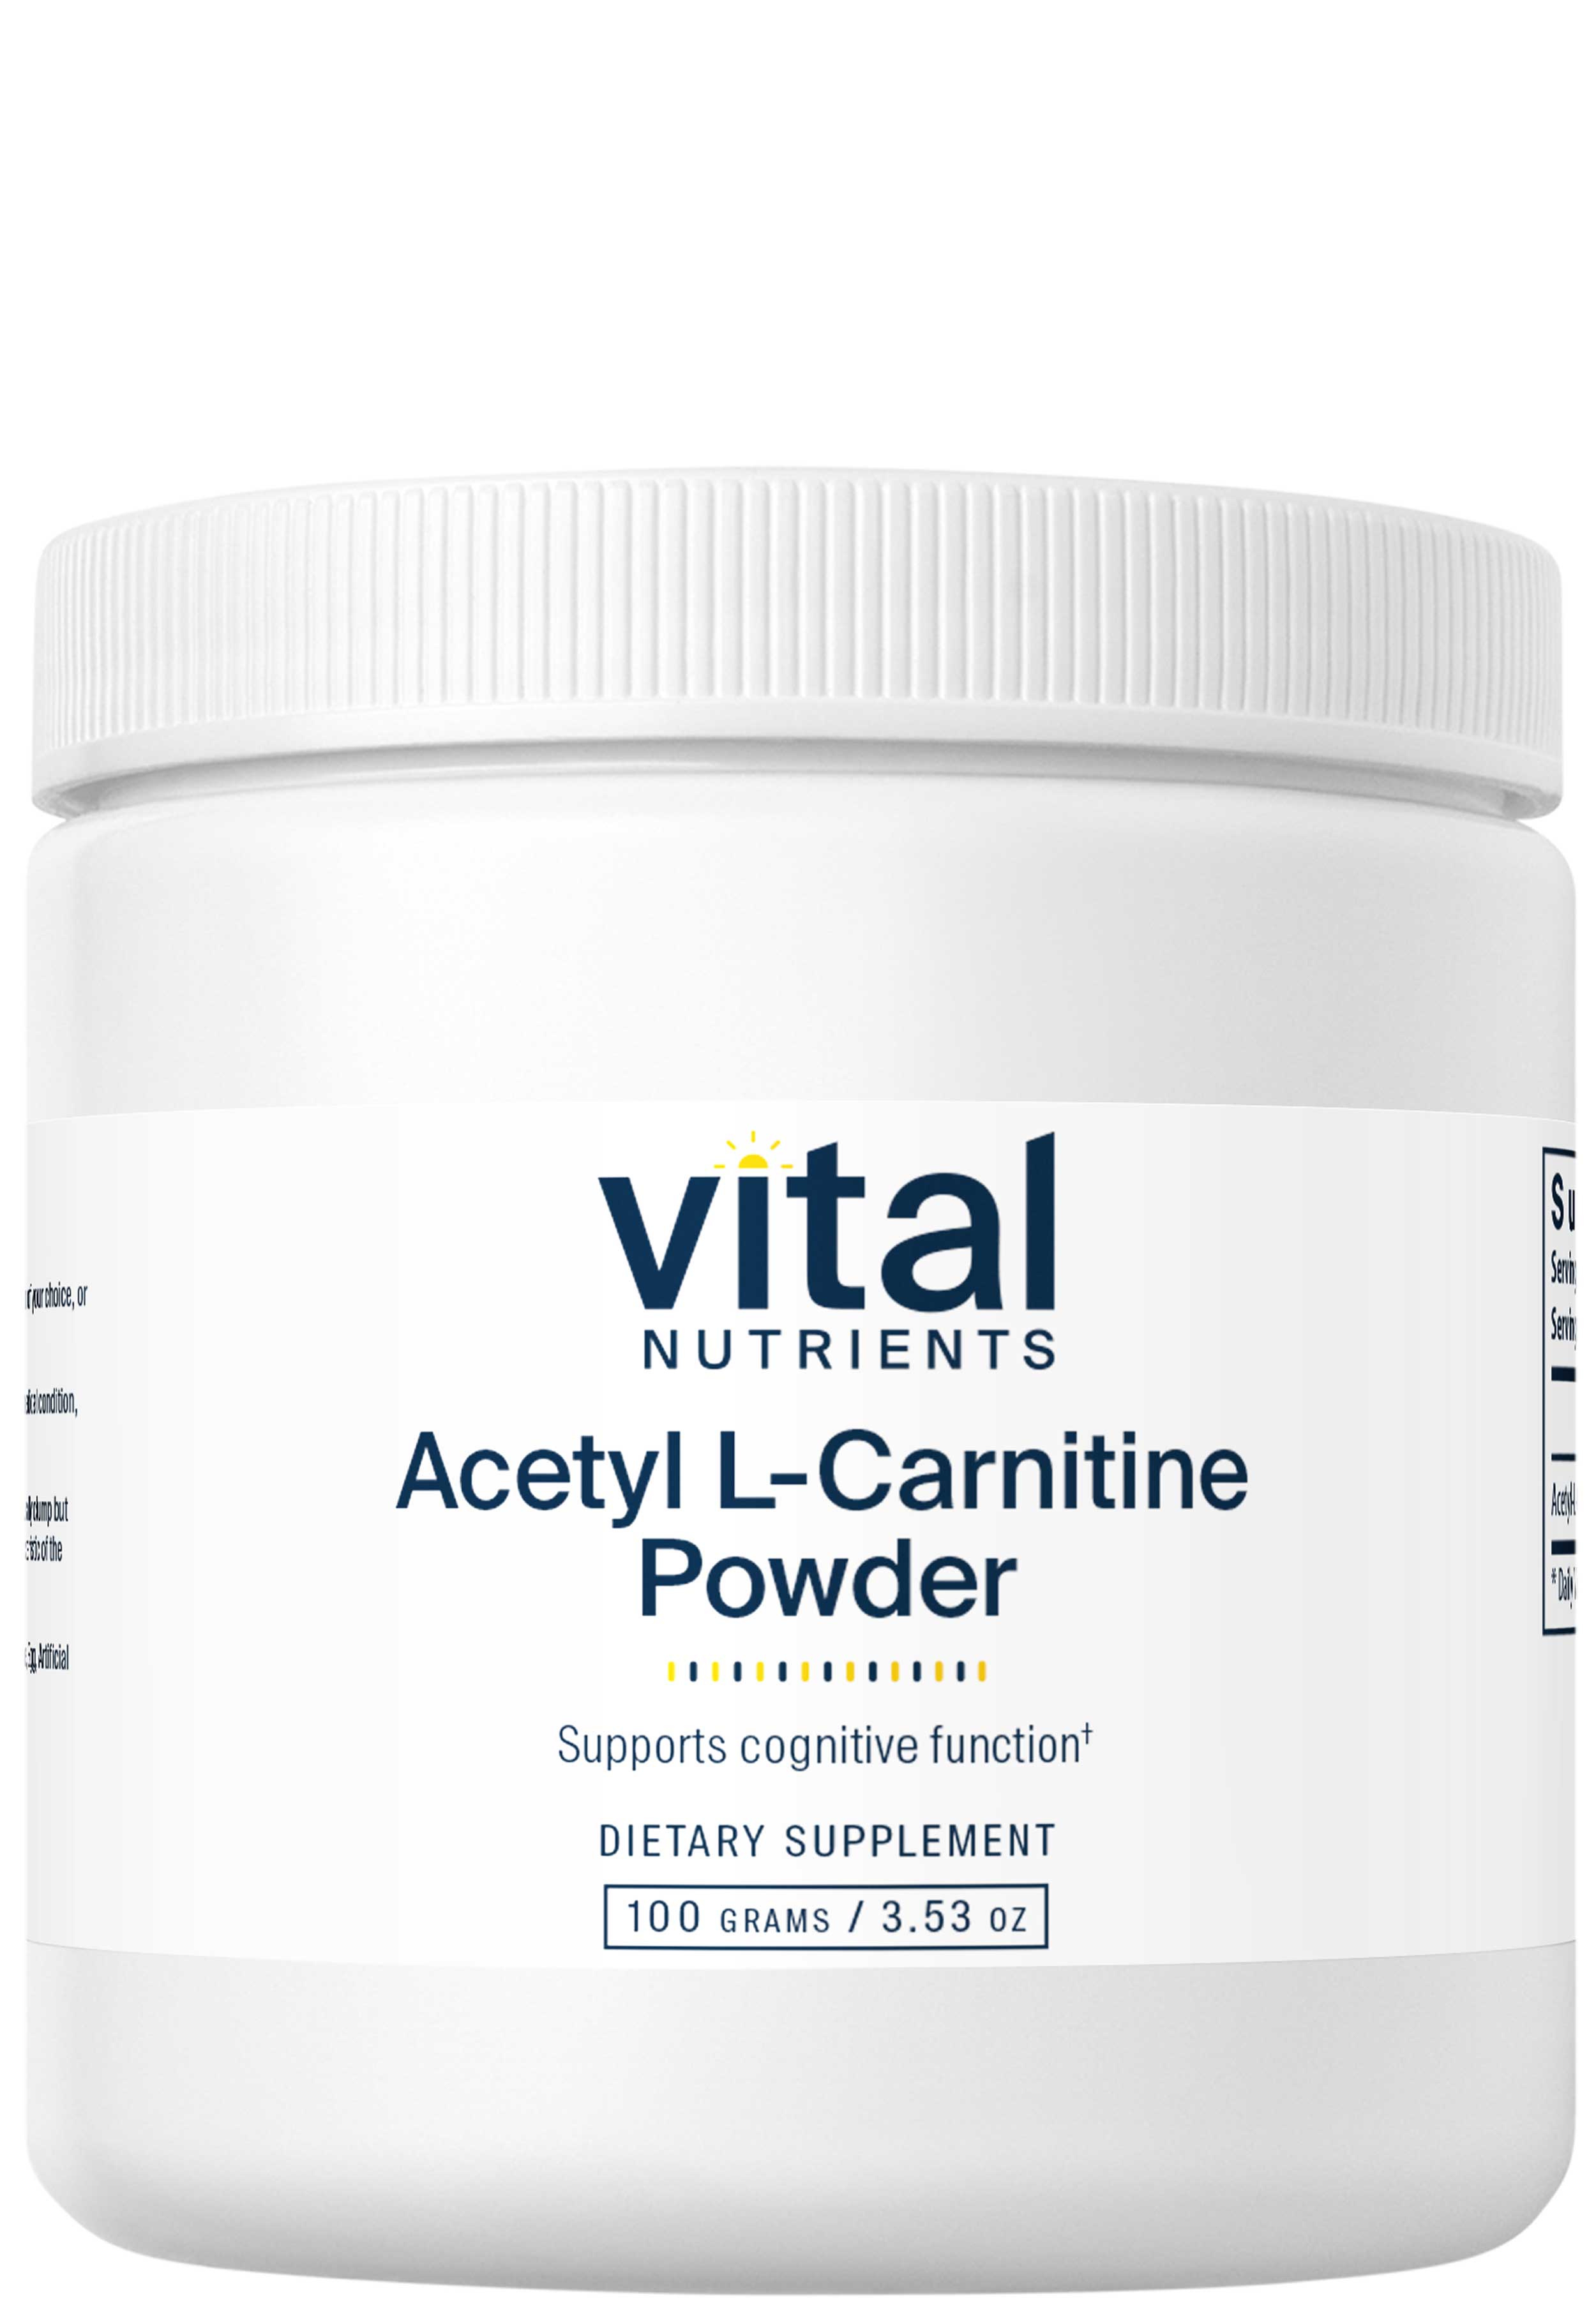 Vital Nutrients Acetyl L-Carnitine Powder